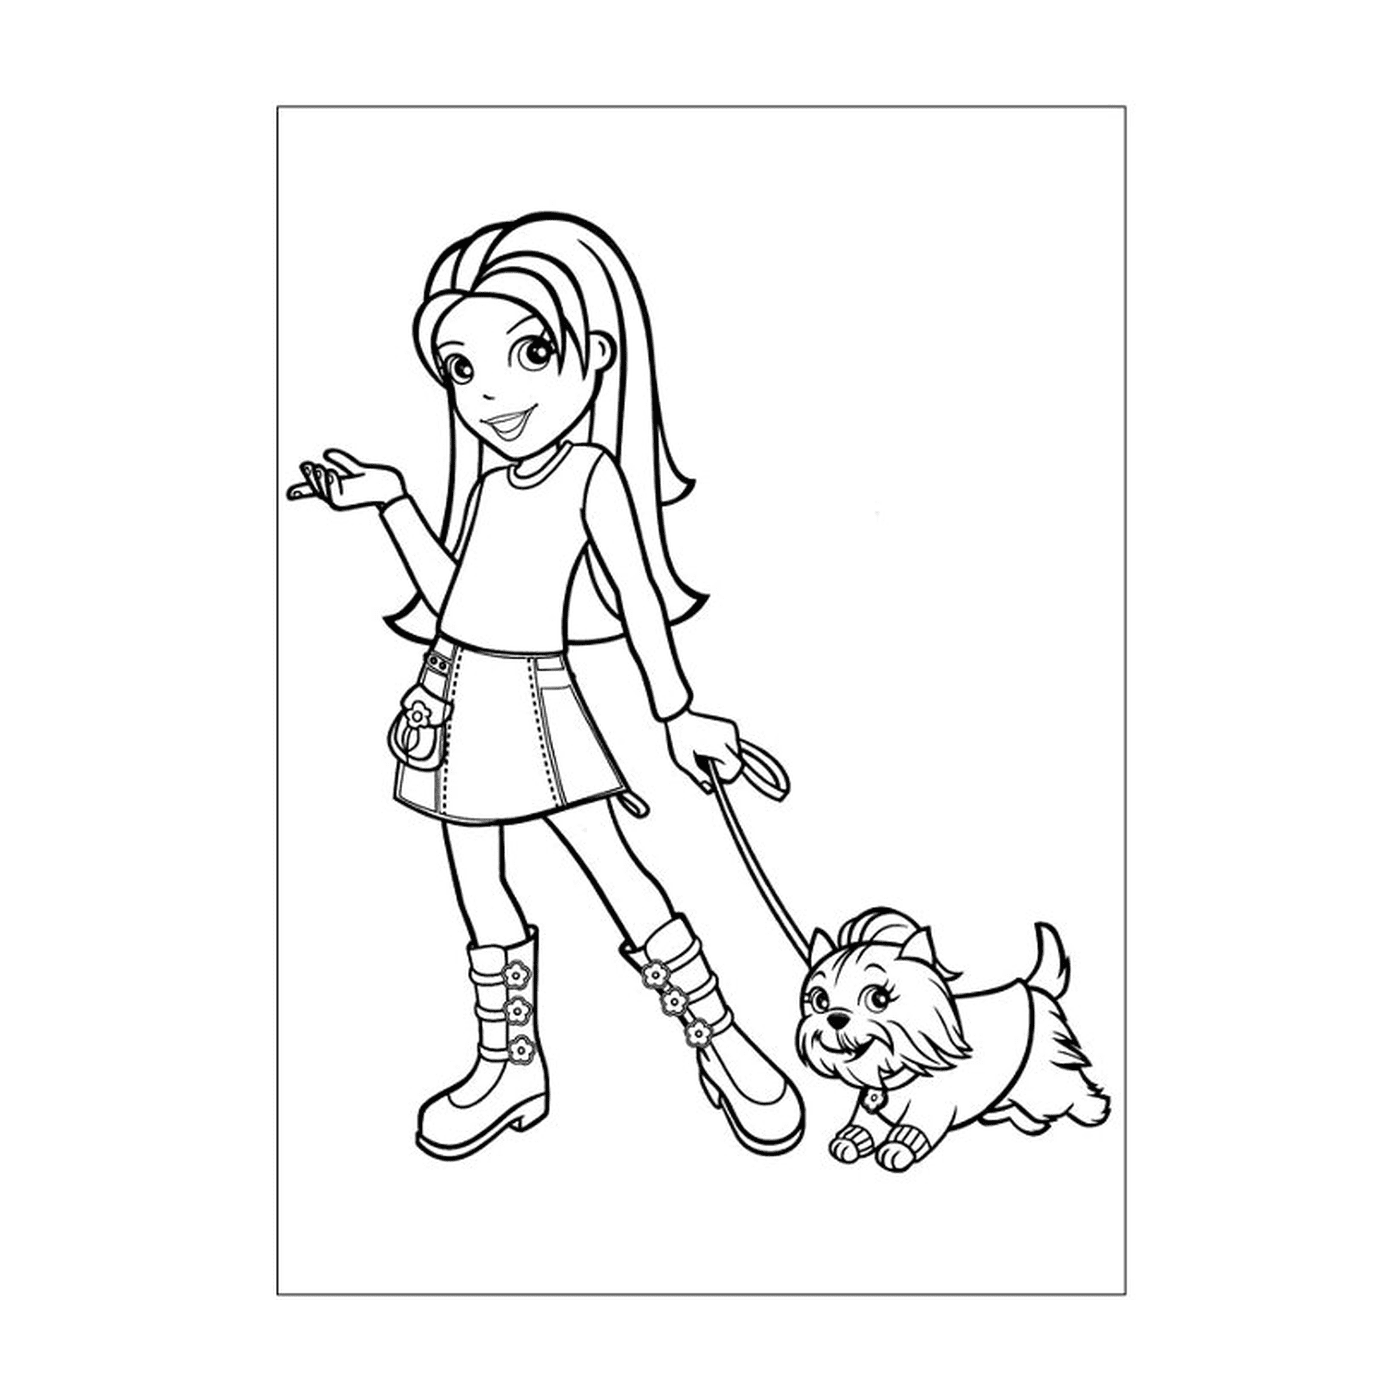  Una chica paseando a un perro con una correa 